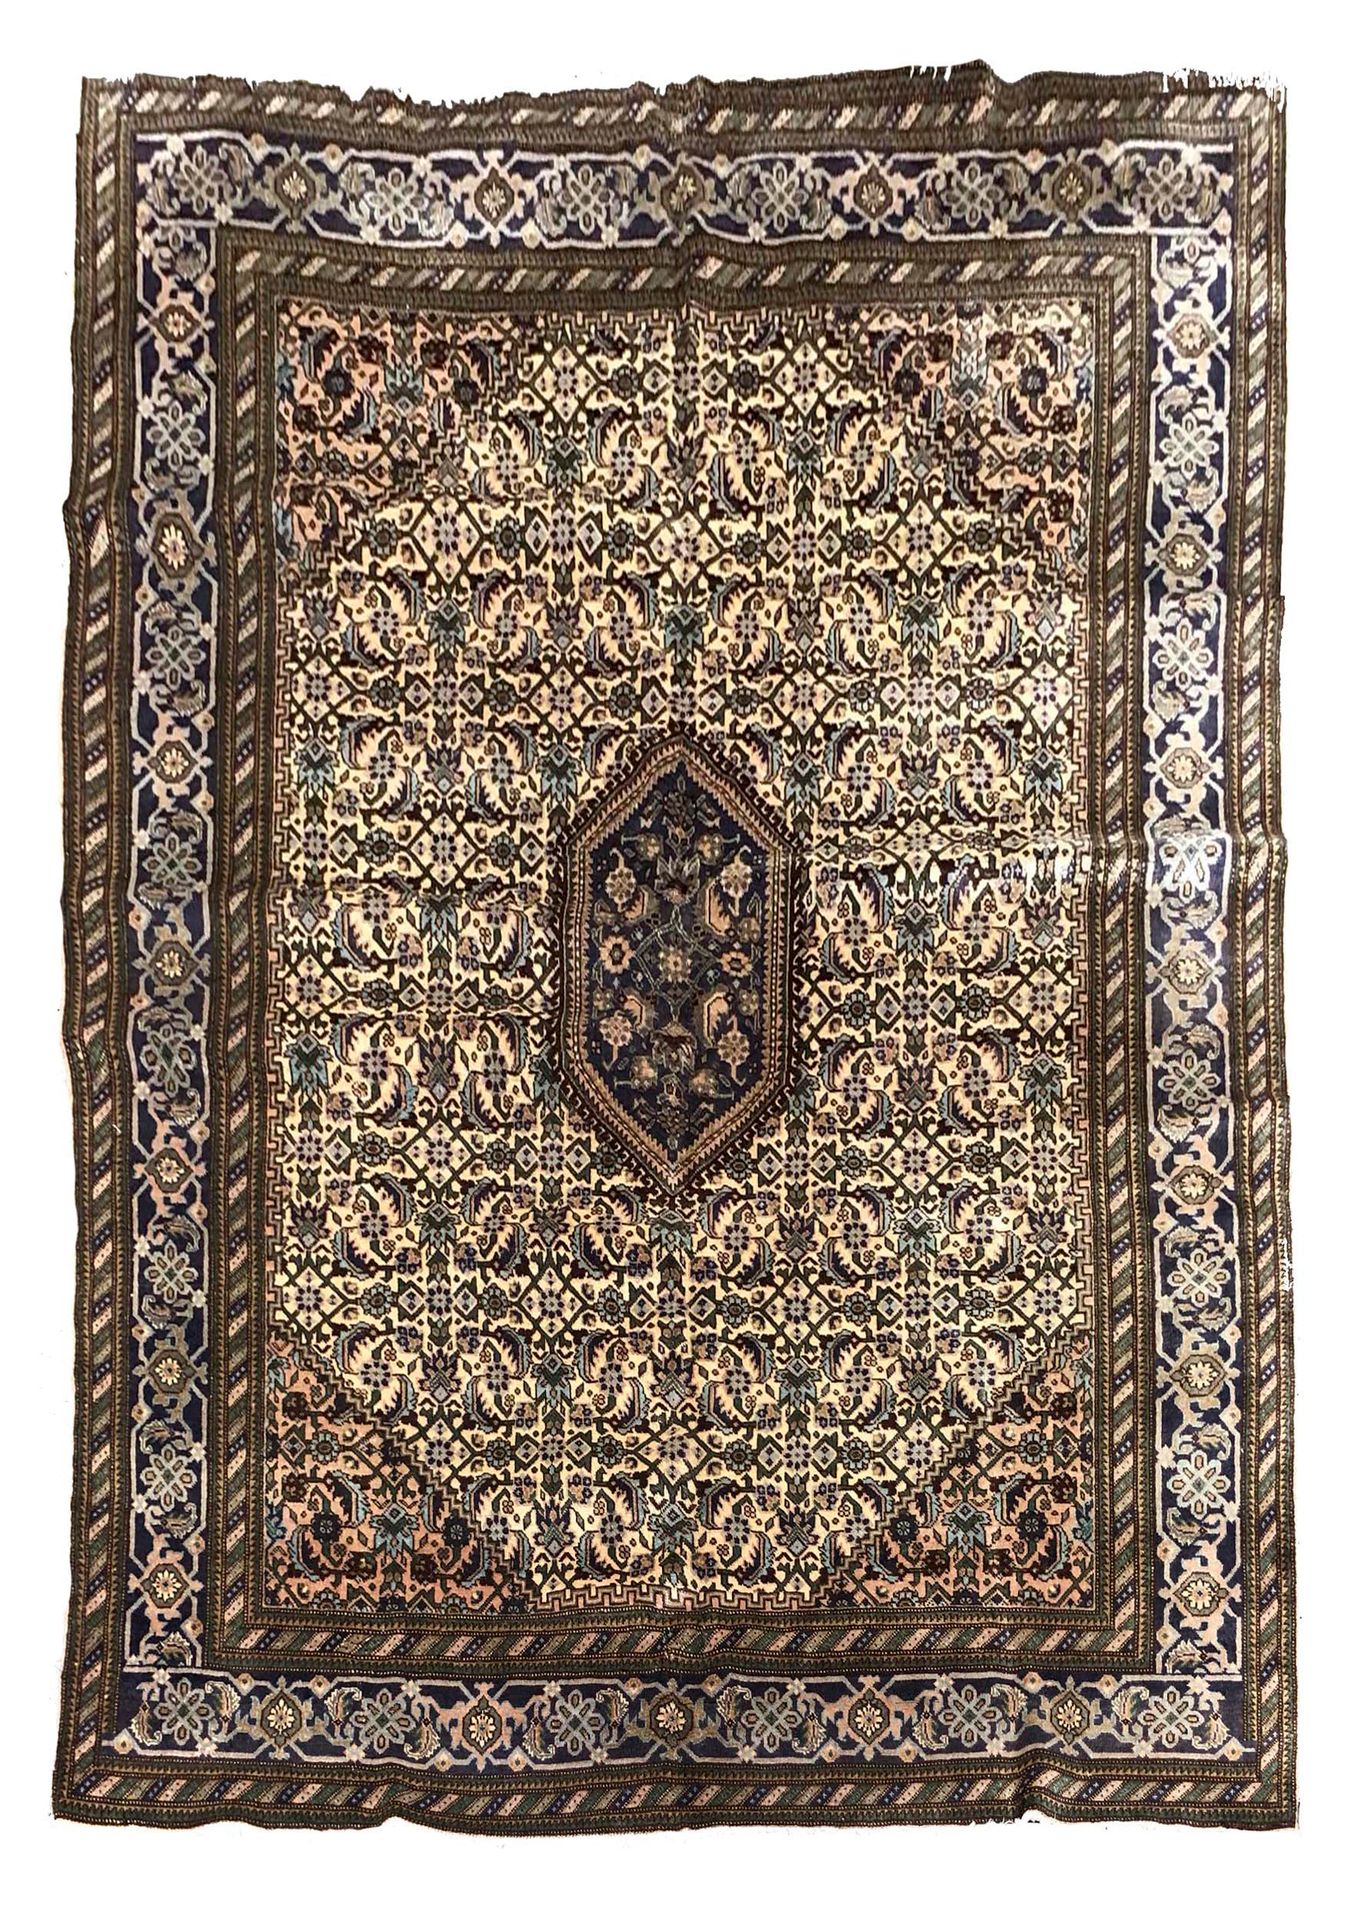 Null MÉCHKINE地毯（伊朗），20世纪中期

尺寸：311 x 228厘米。

技术特点 : 羊毛天鹅绒，棉质底板。

象牙色的场地上有风格化的花朵和&hellip;